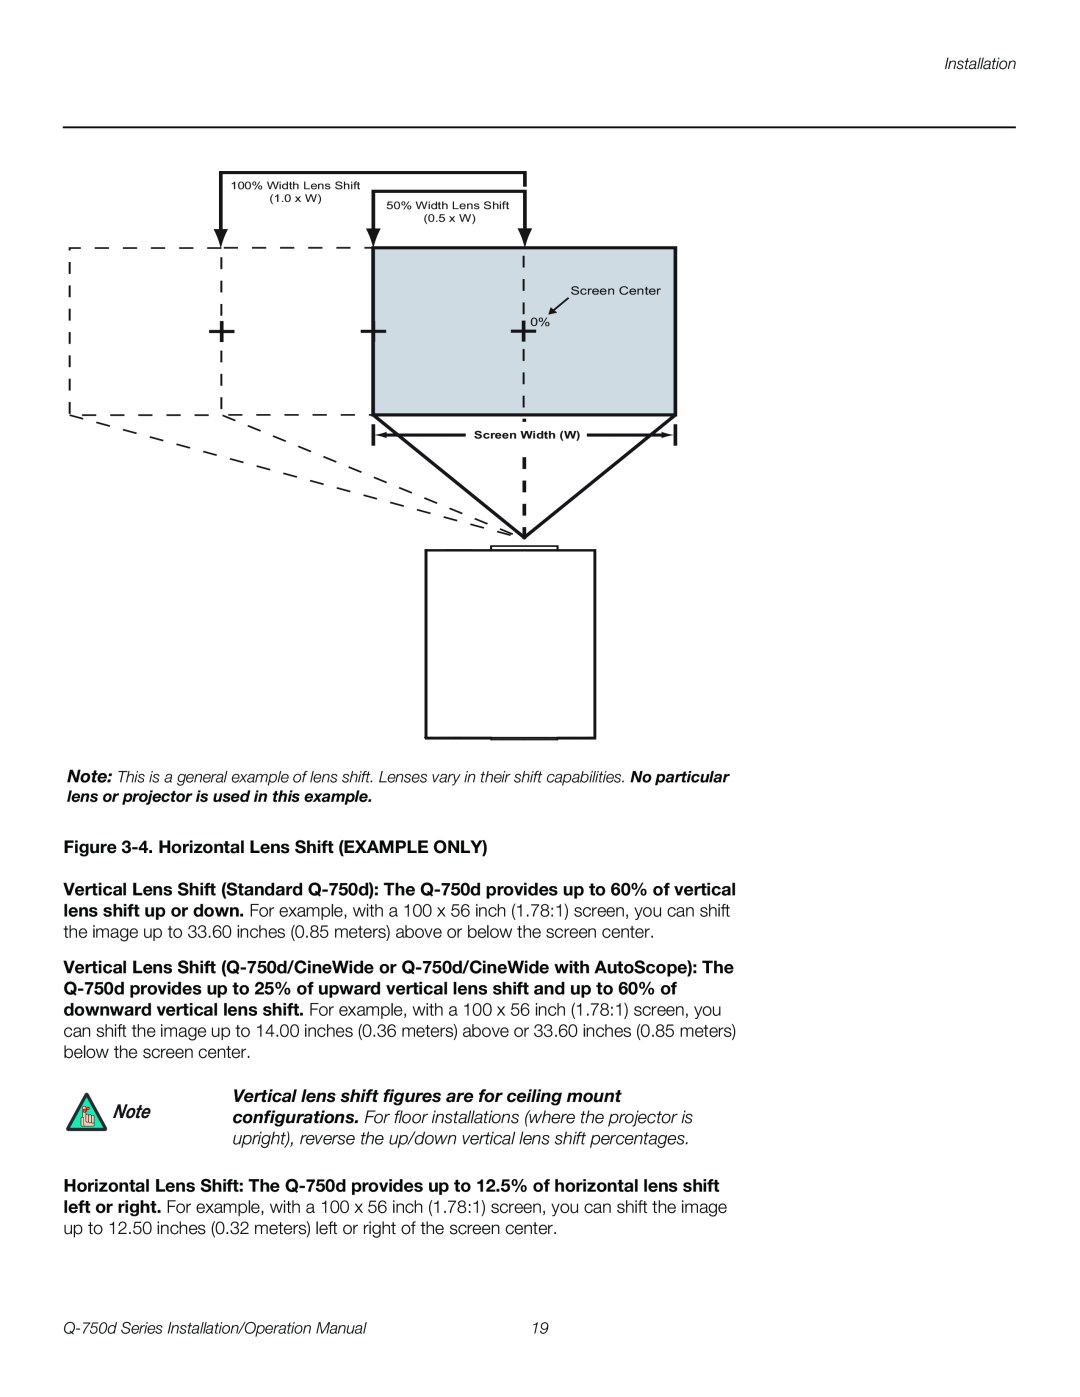 Runco Q-750D operation manual 4.Horizontal Lens Shift EXAMPLE ONLY 